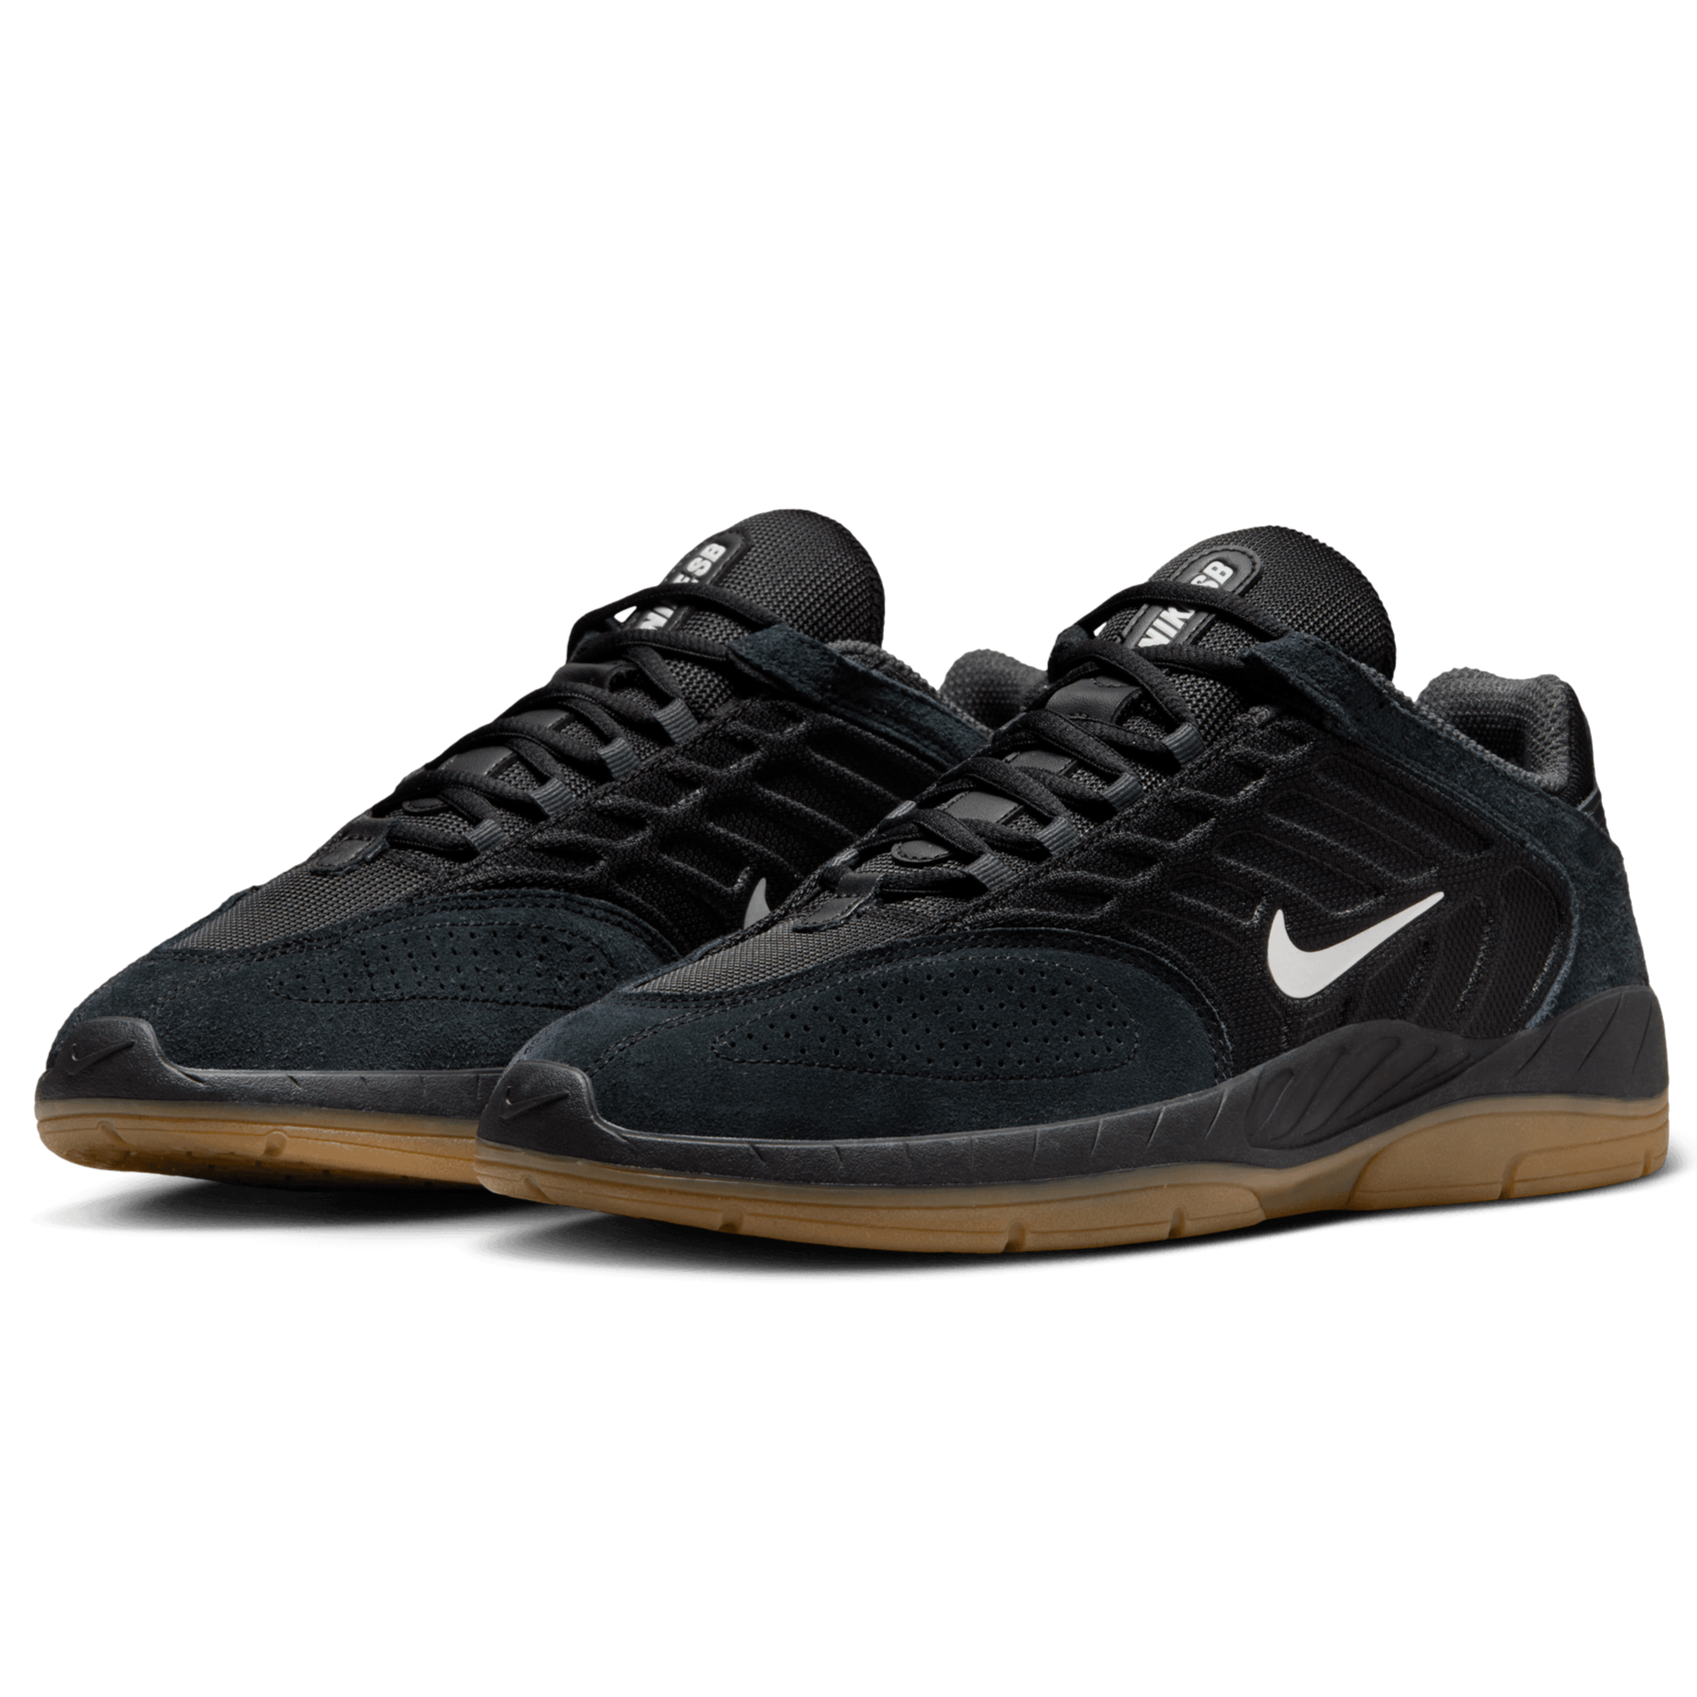 Black/Gum Vertebrae Nike SB Skate Shoe Front